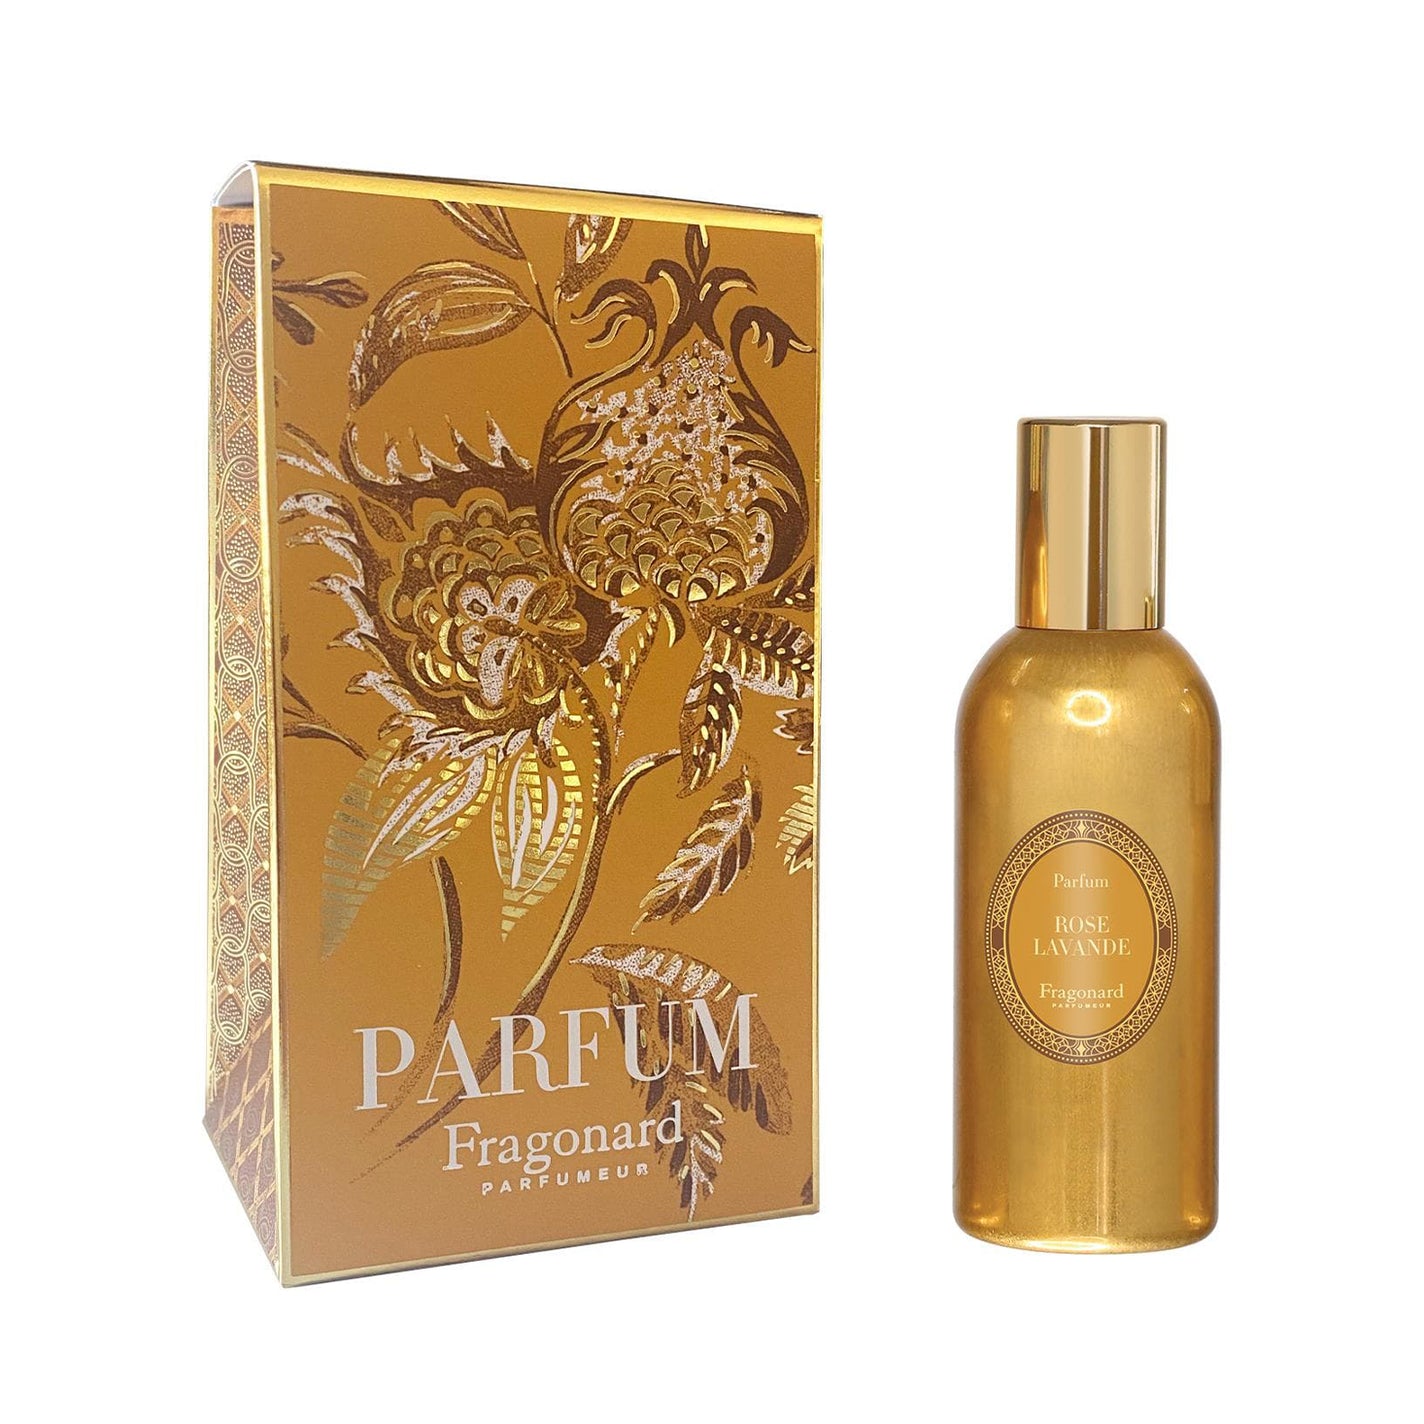 Fragonard Rose Lavande 'Estagon' Parfum - 60ml